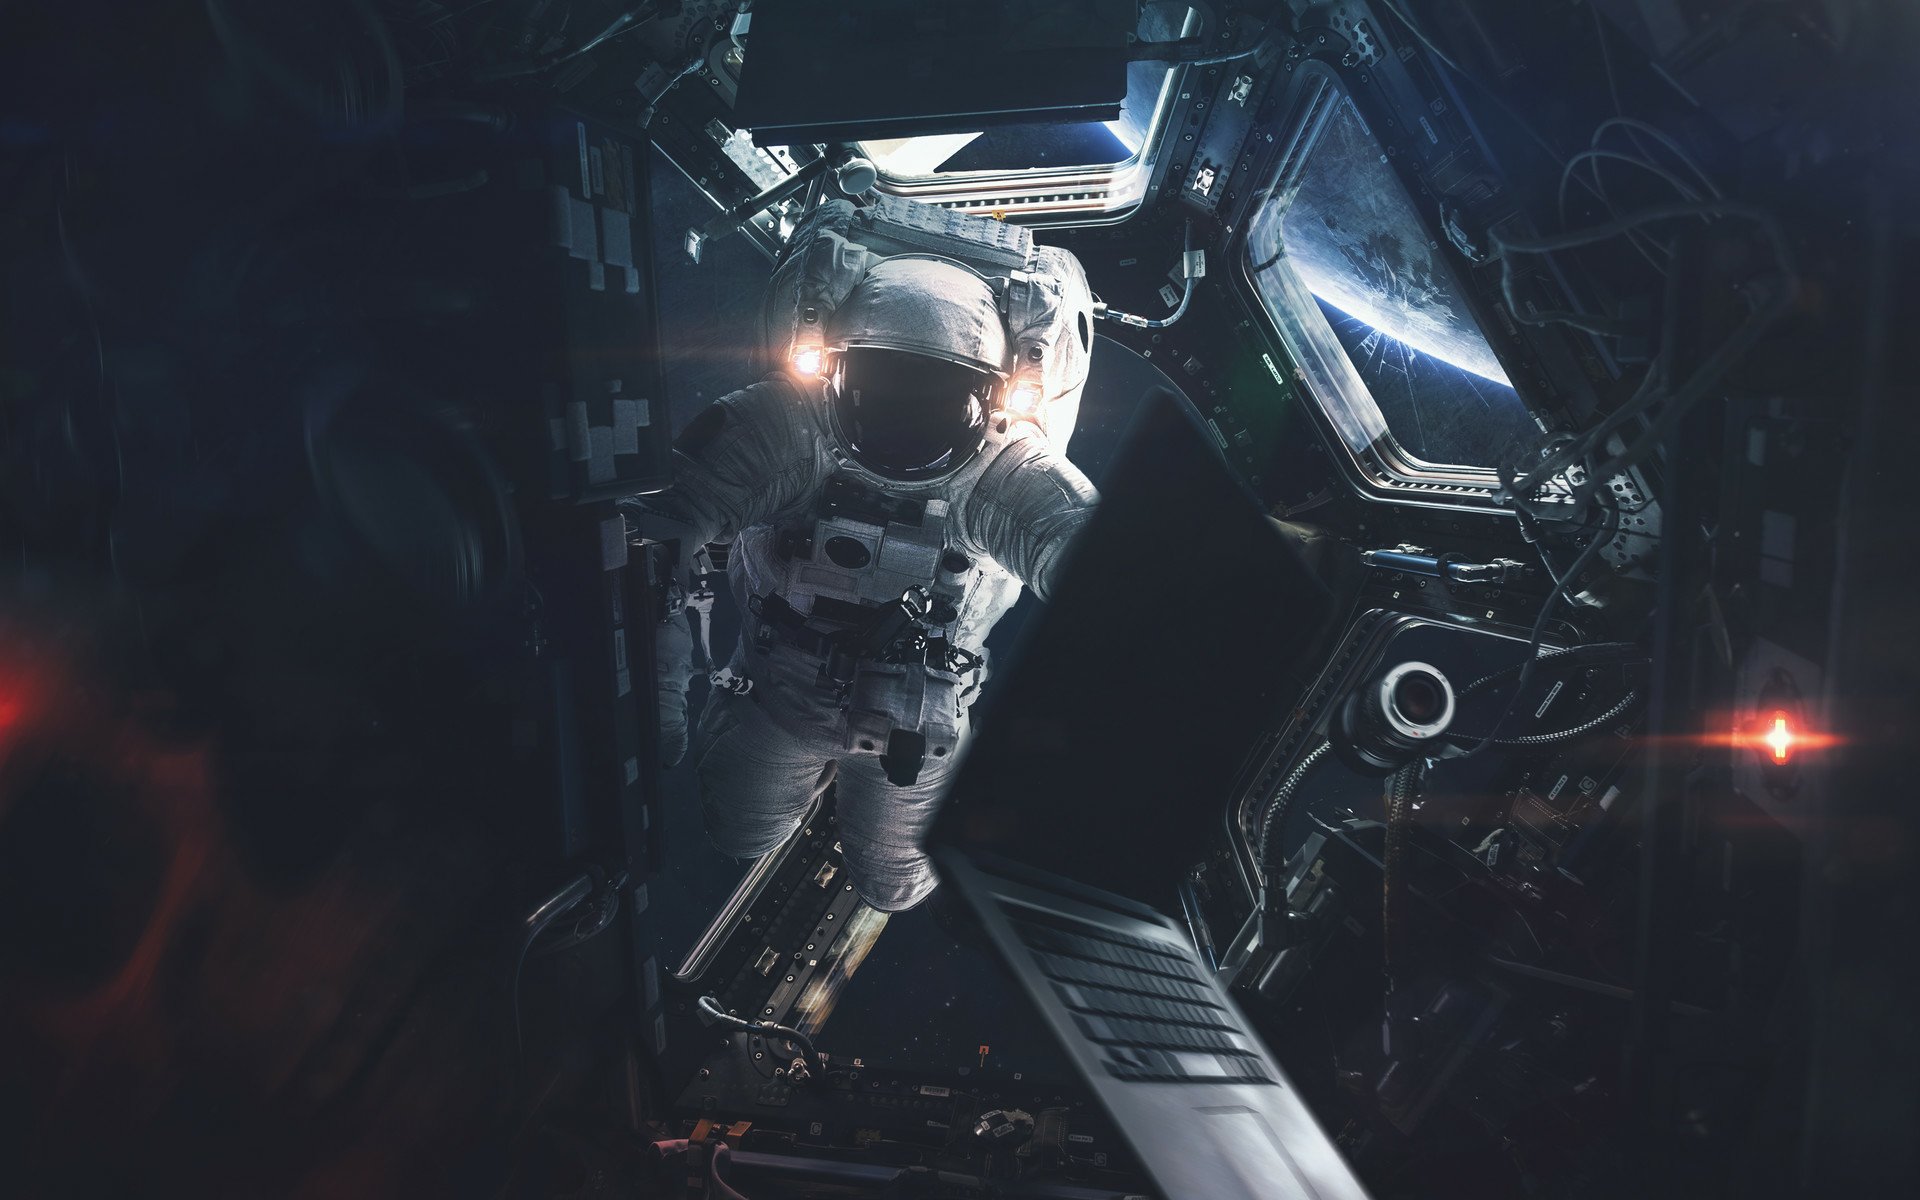 Sci Fi Astronaut HD Wallpaper by Vadim Sadovski